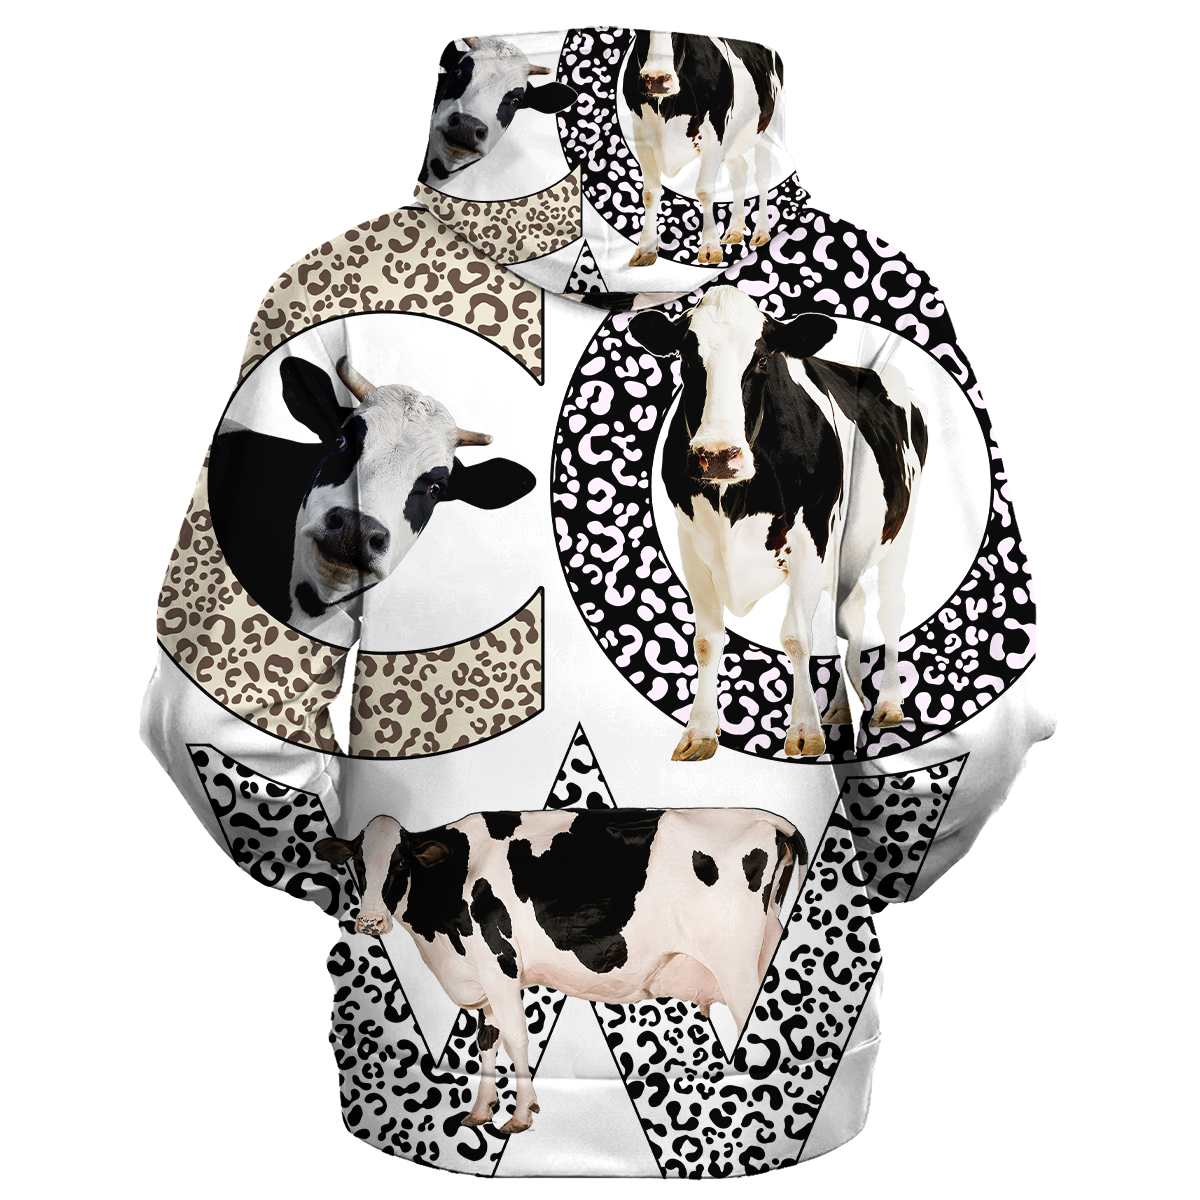 Cows With Leopard Fur Pattern Hoodie